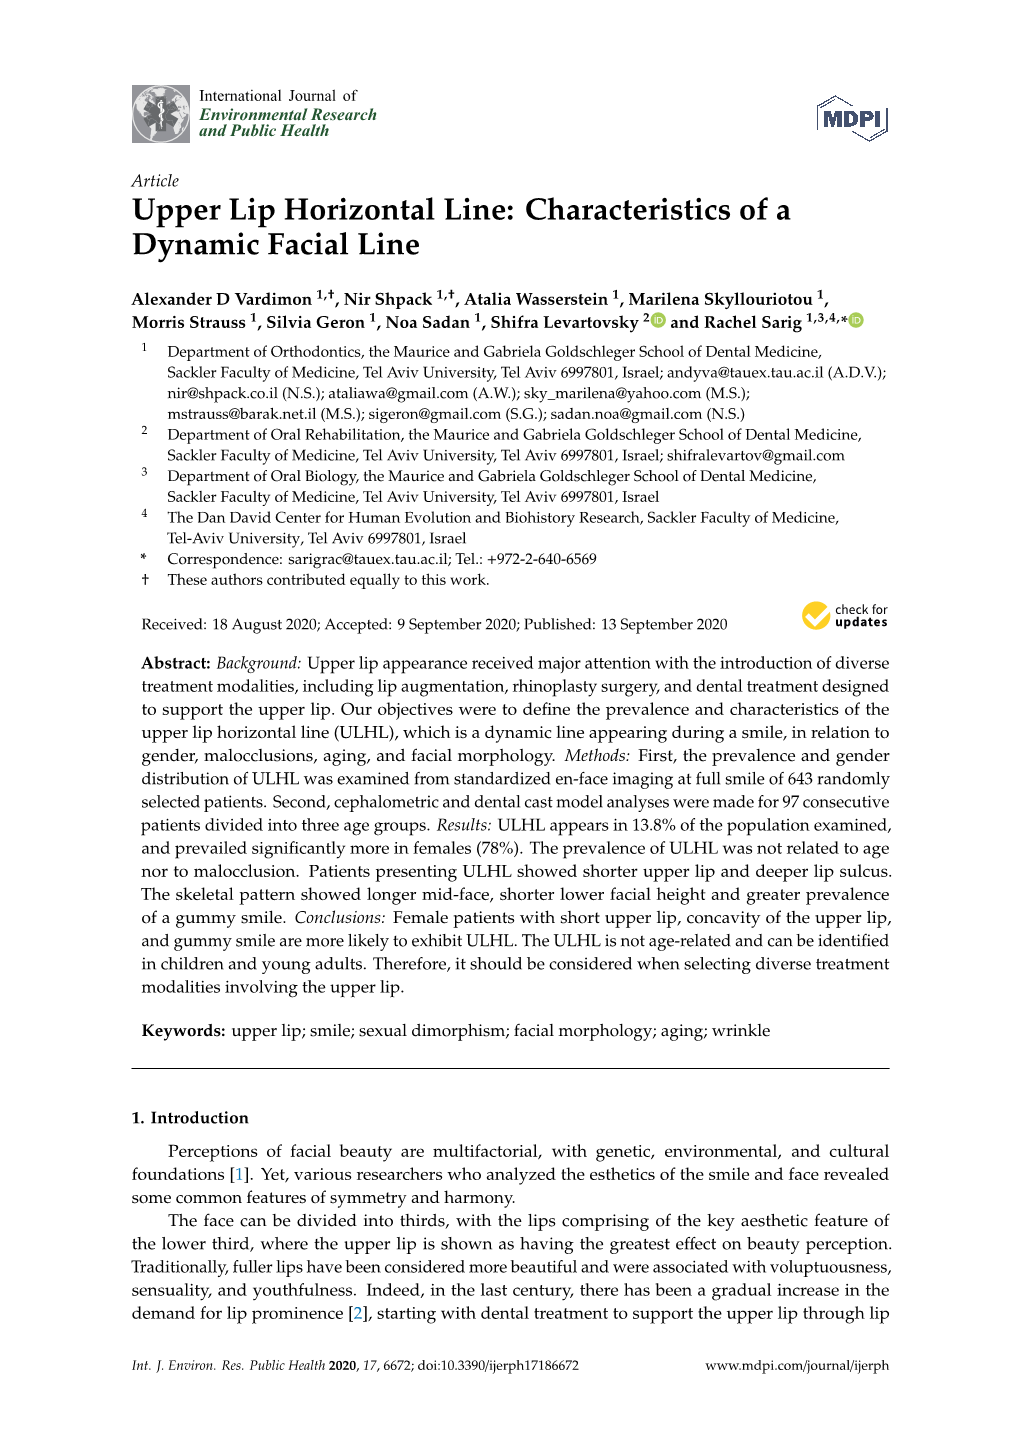 Upper Lip Horizontal Line: Characteristics of a Dynamic Facial Line